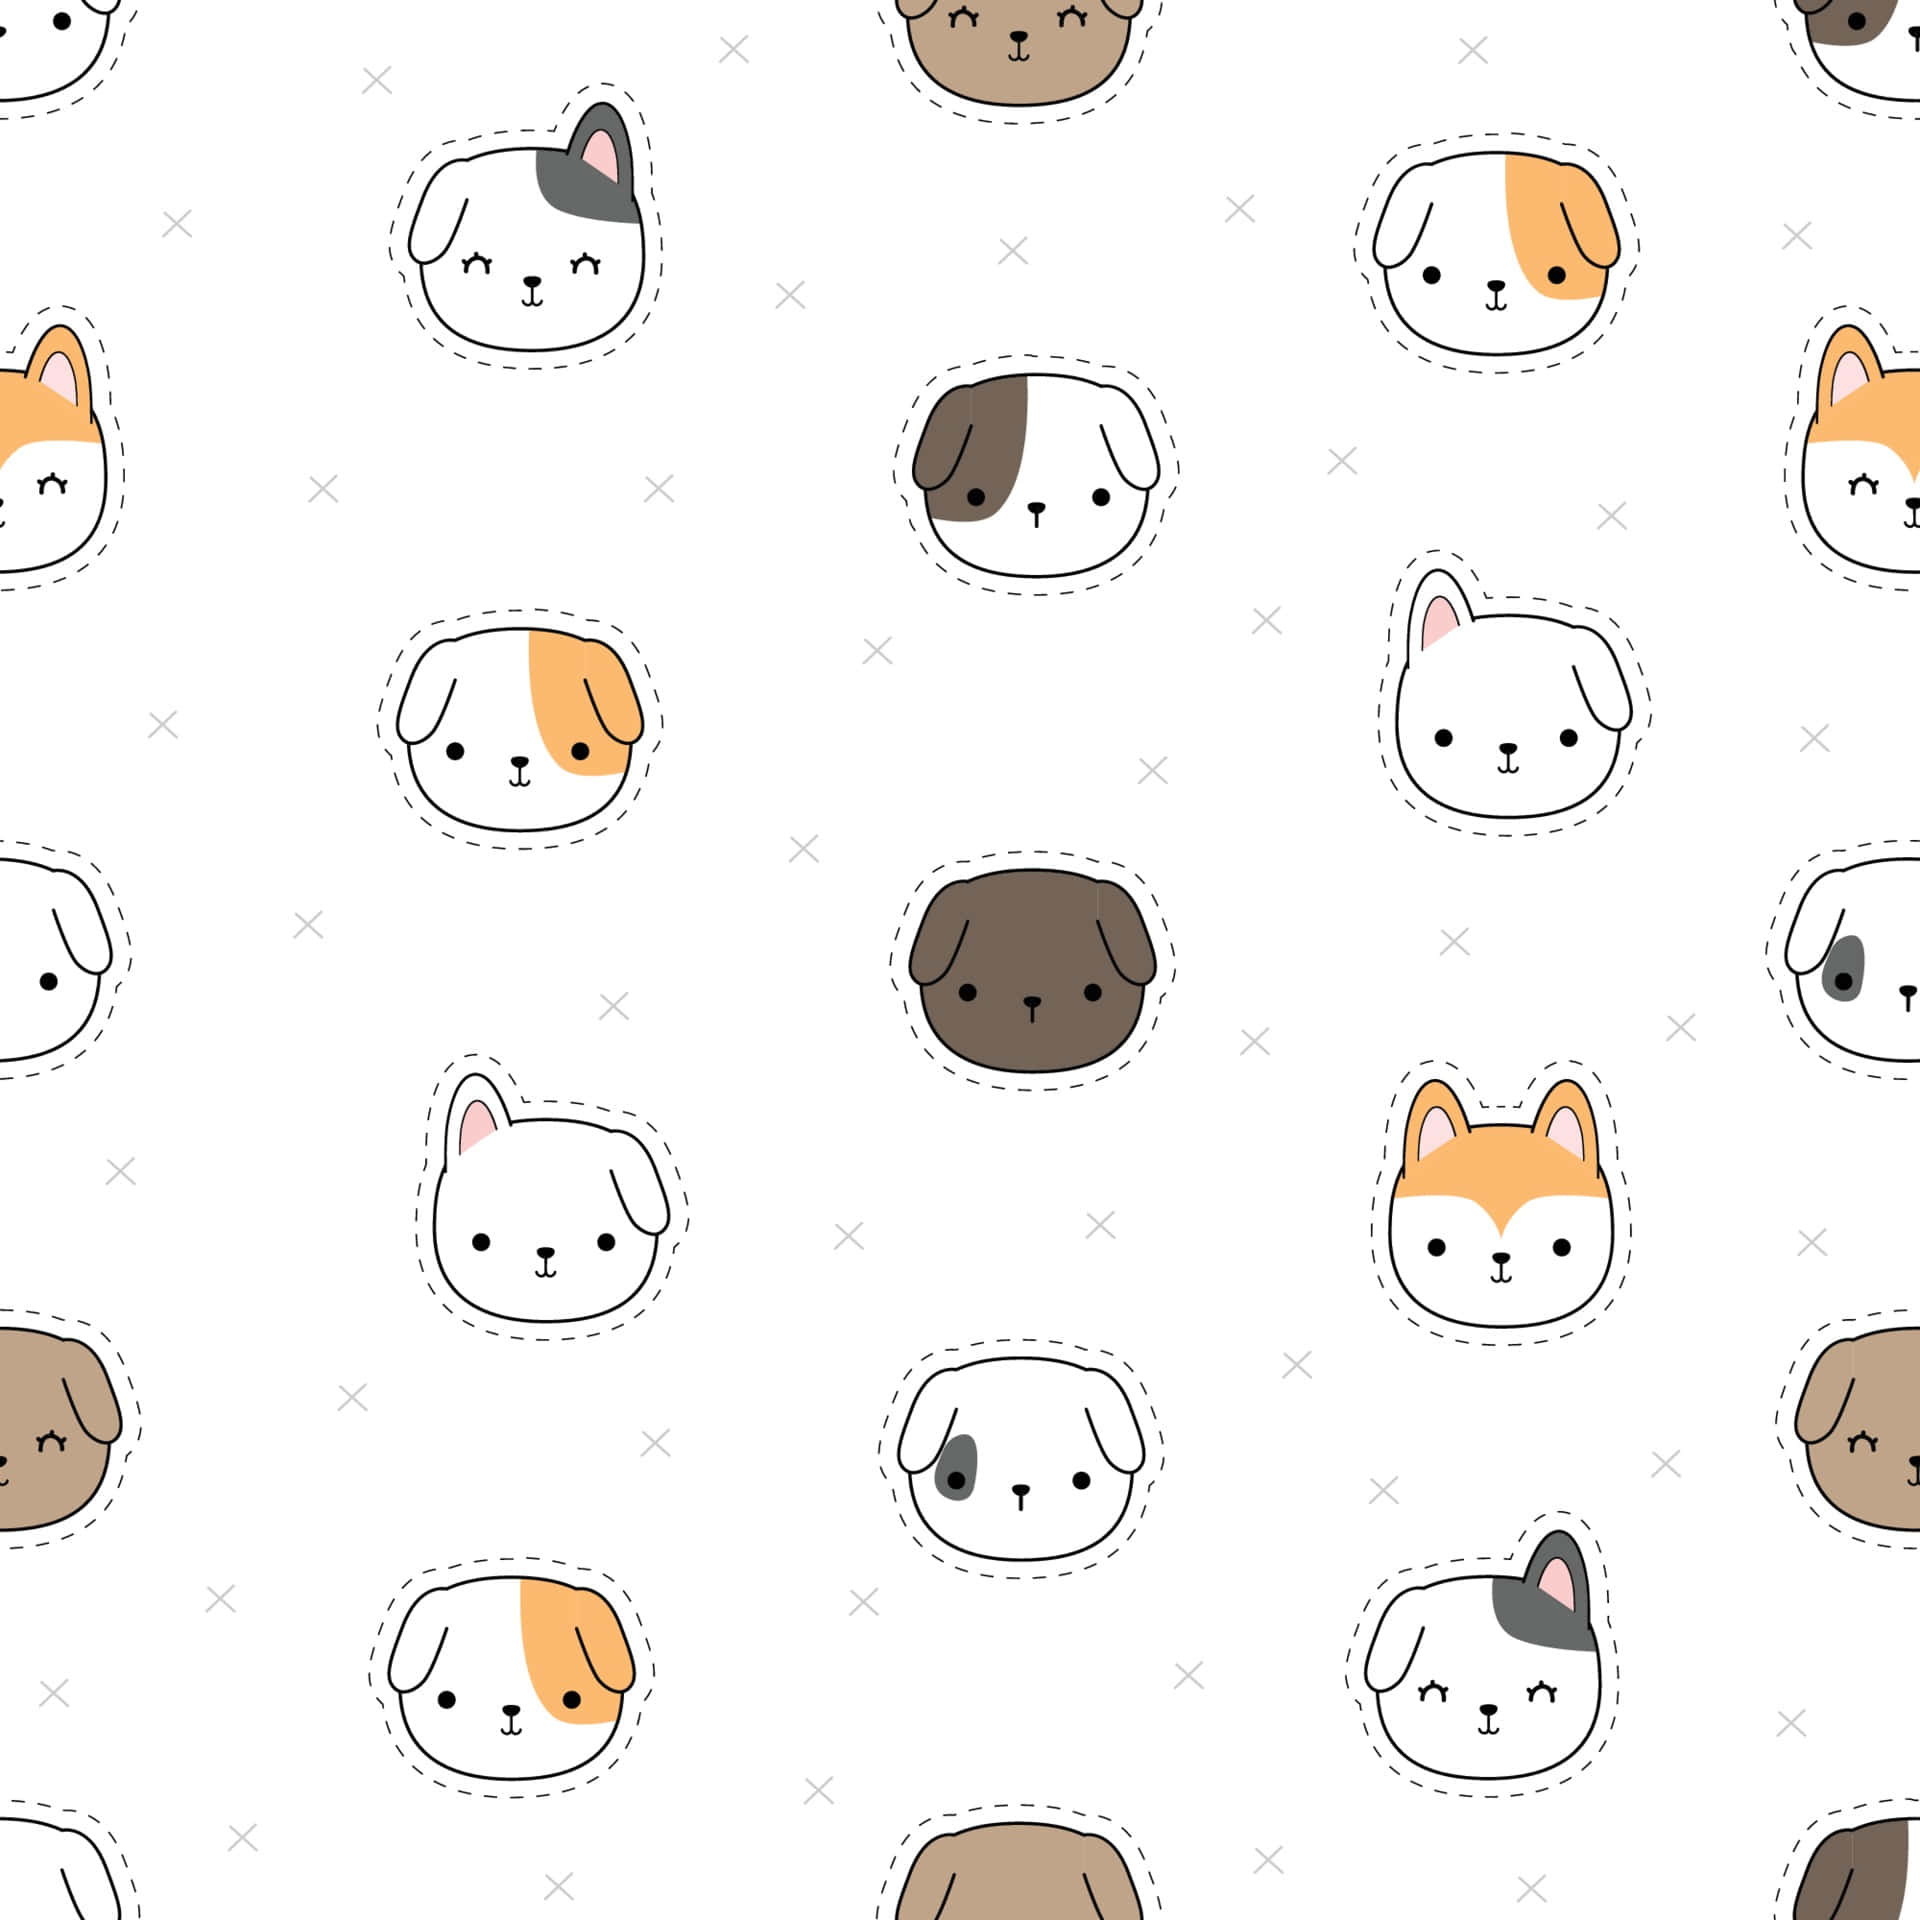 Free Cute Cartoon Dog Wallpaper Downloads, [100+] Cute Cartoon Dog  Wallpapers for FREE 